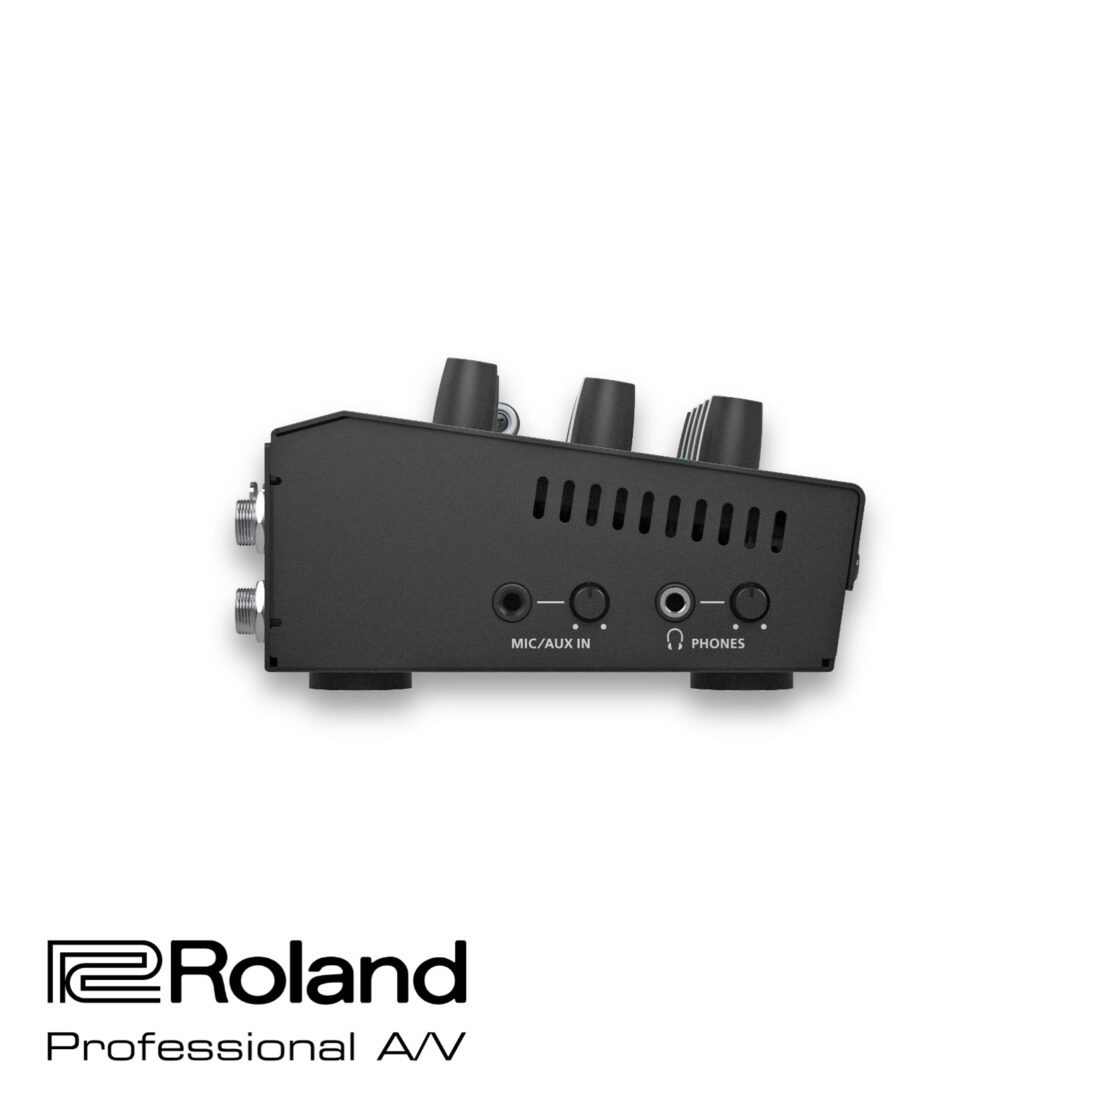 Roland V-1HD Plus